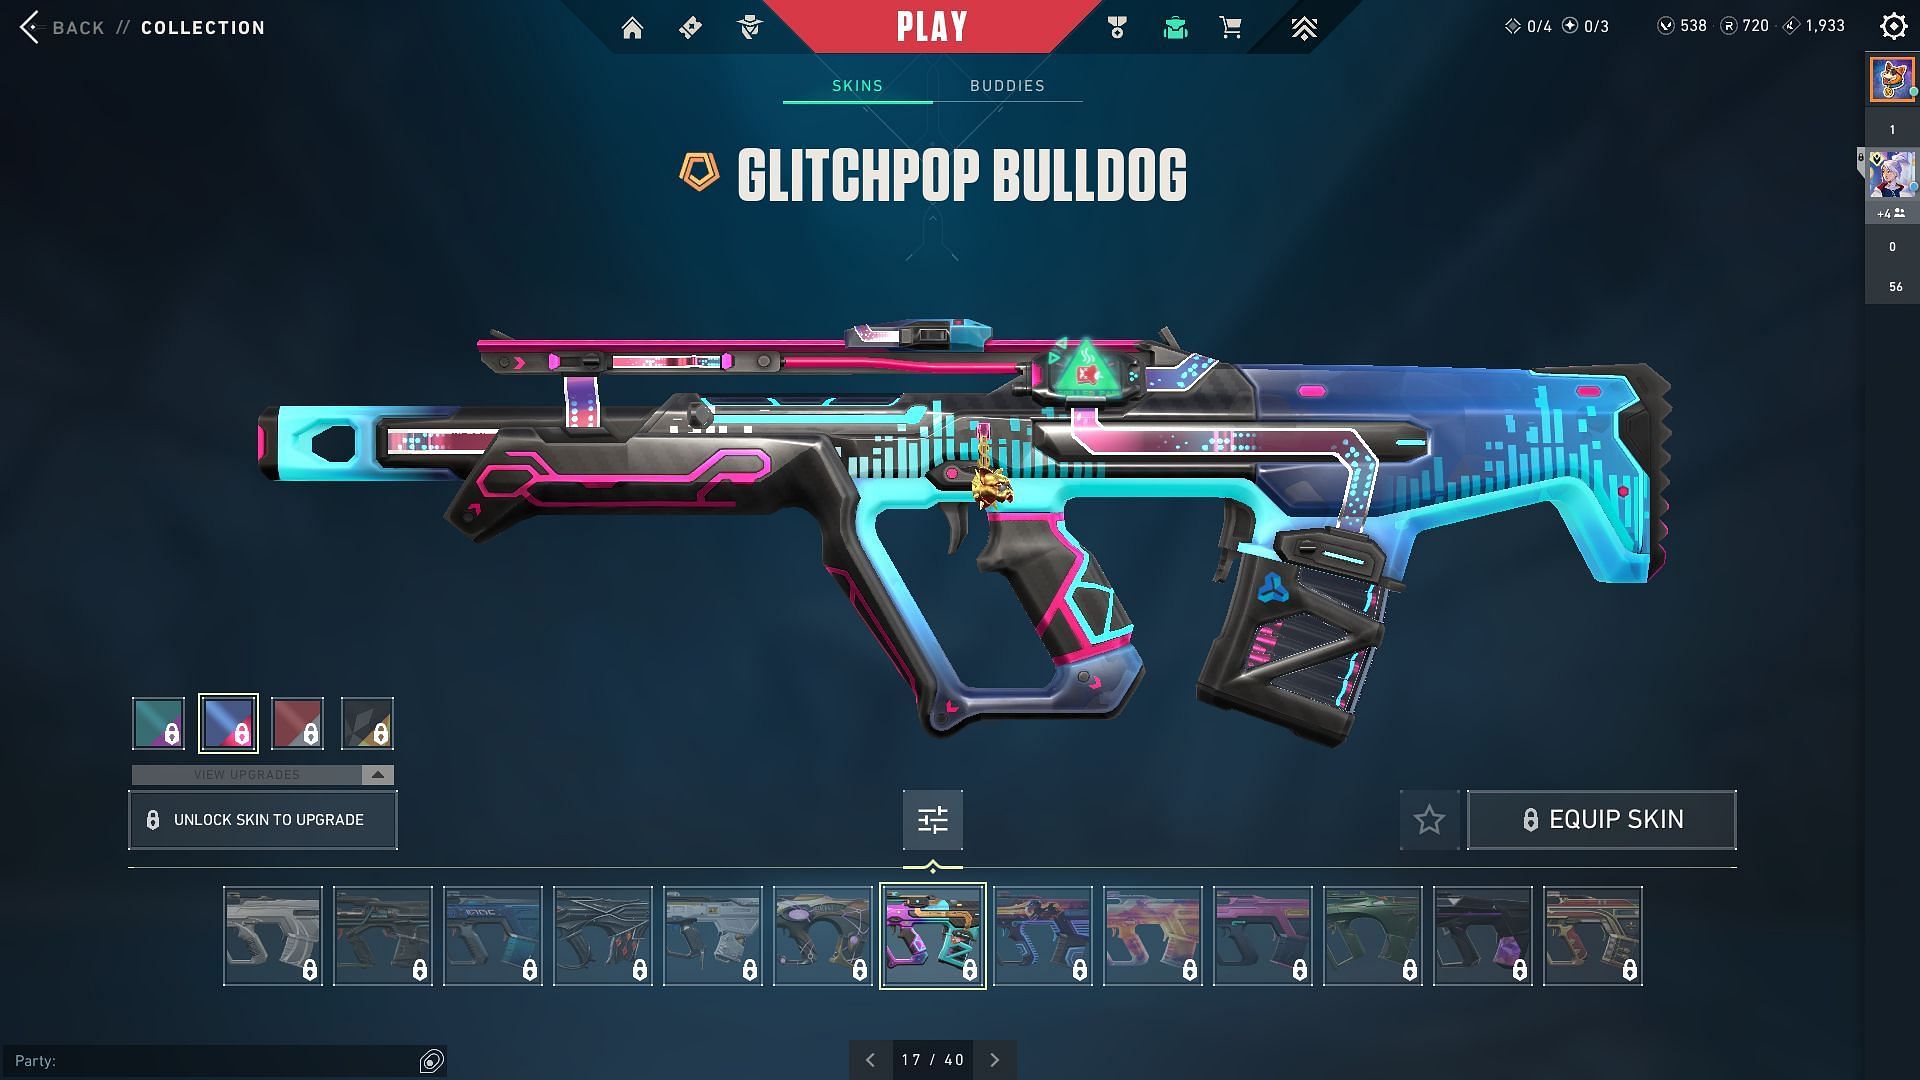 Gltichpop Bulldog (Image via Riot Games)